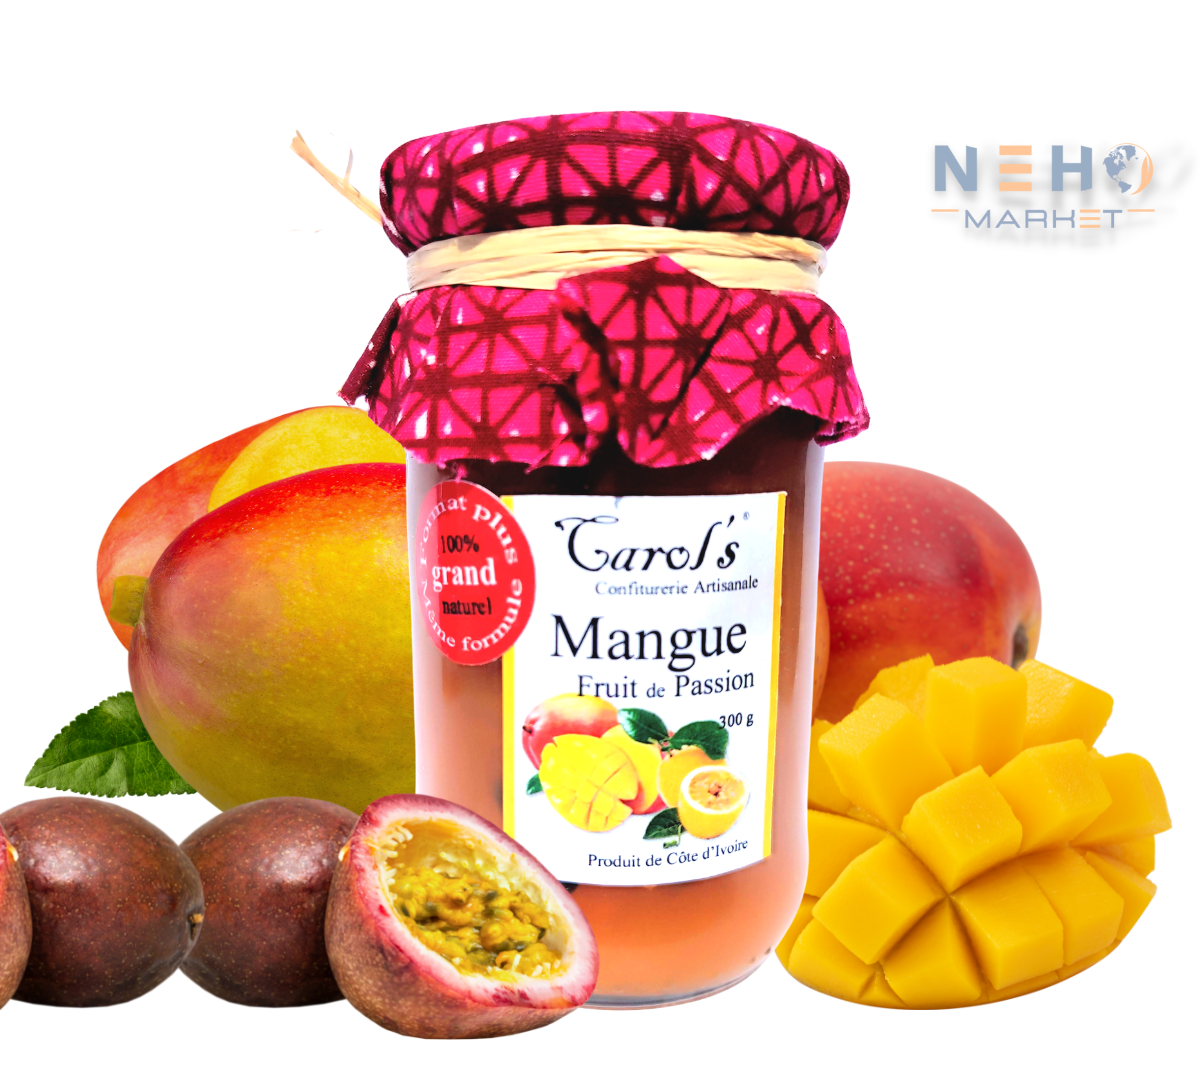 Mango and Passion Fruit Jam [Grenadilla] - CAROL'S - 300 g - Origin Ivory Coast